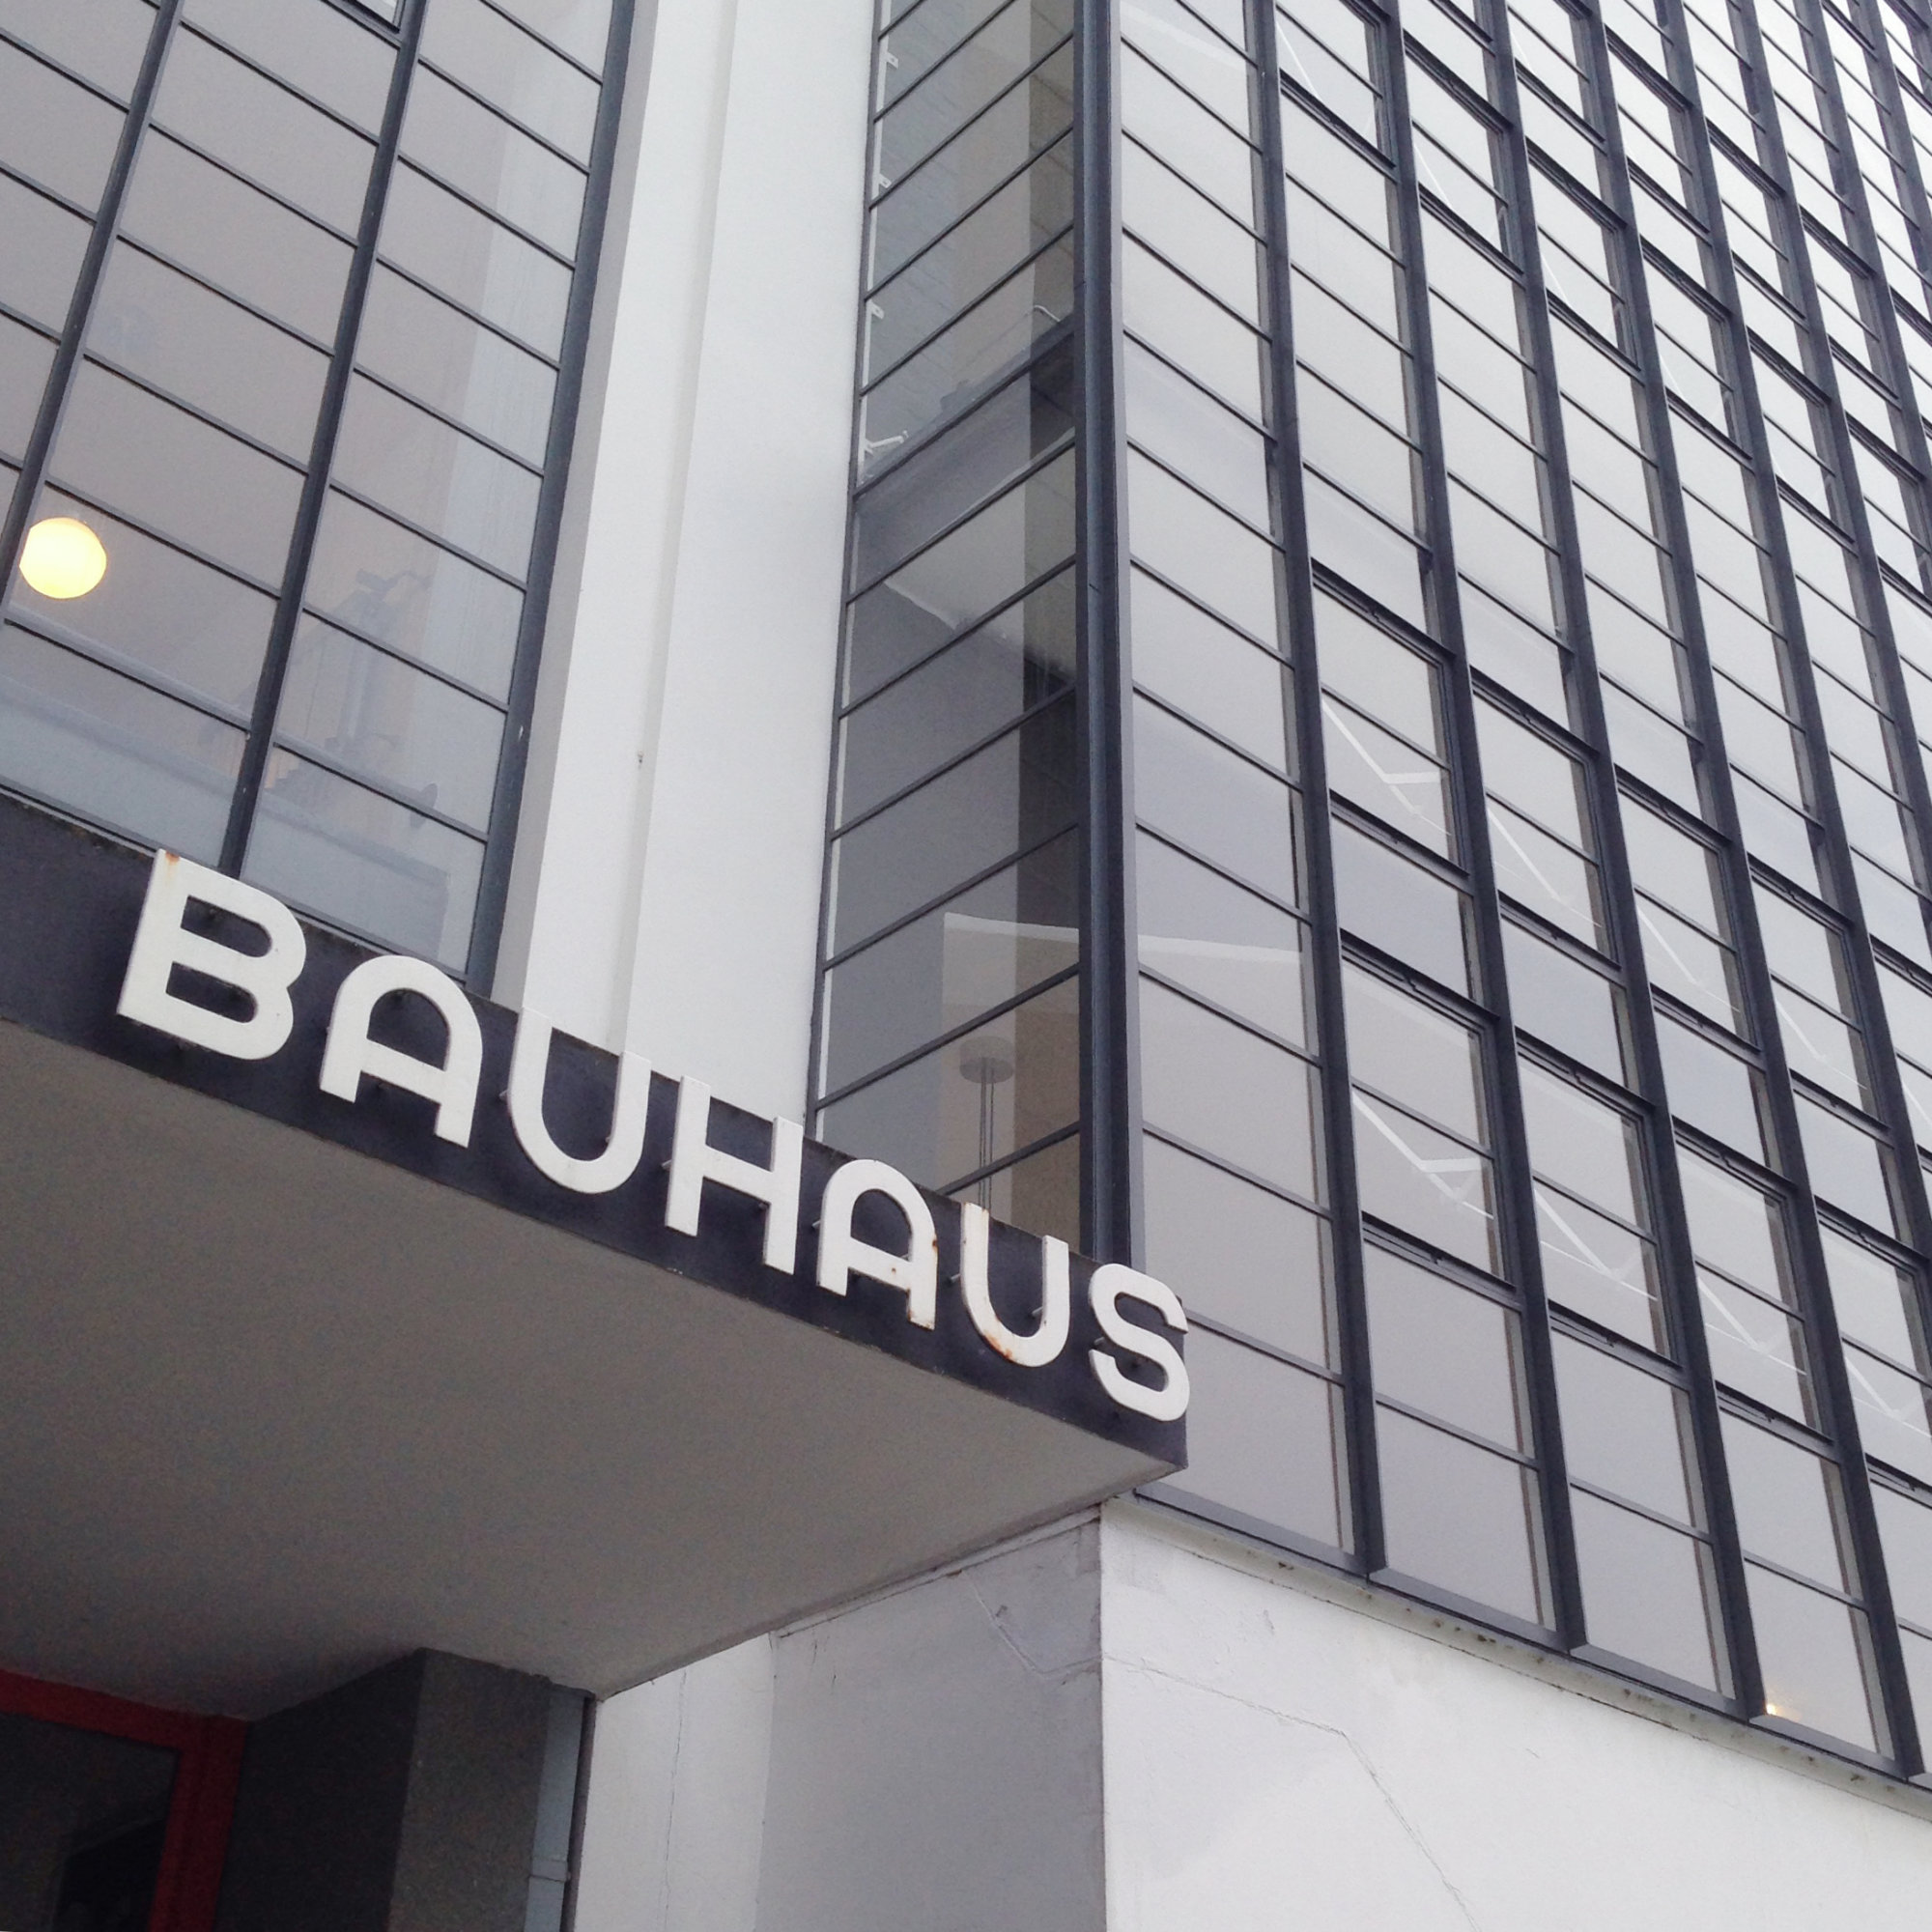 Espiration Bauhaus Entrance Sign